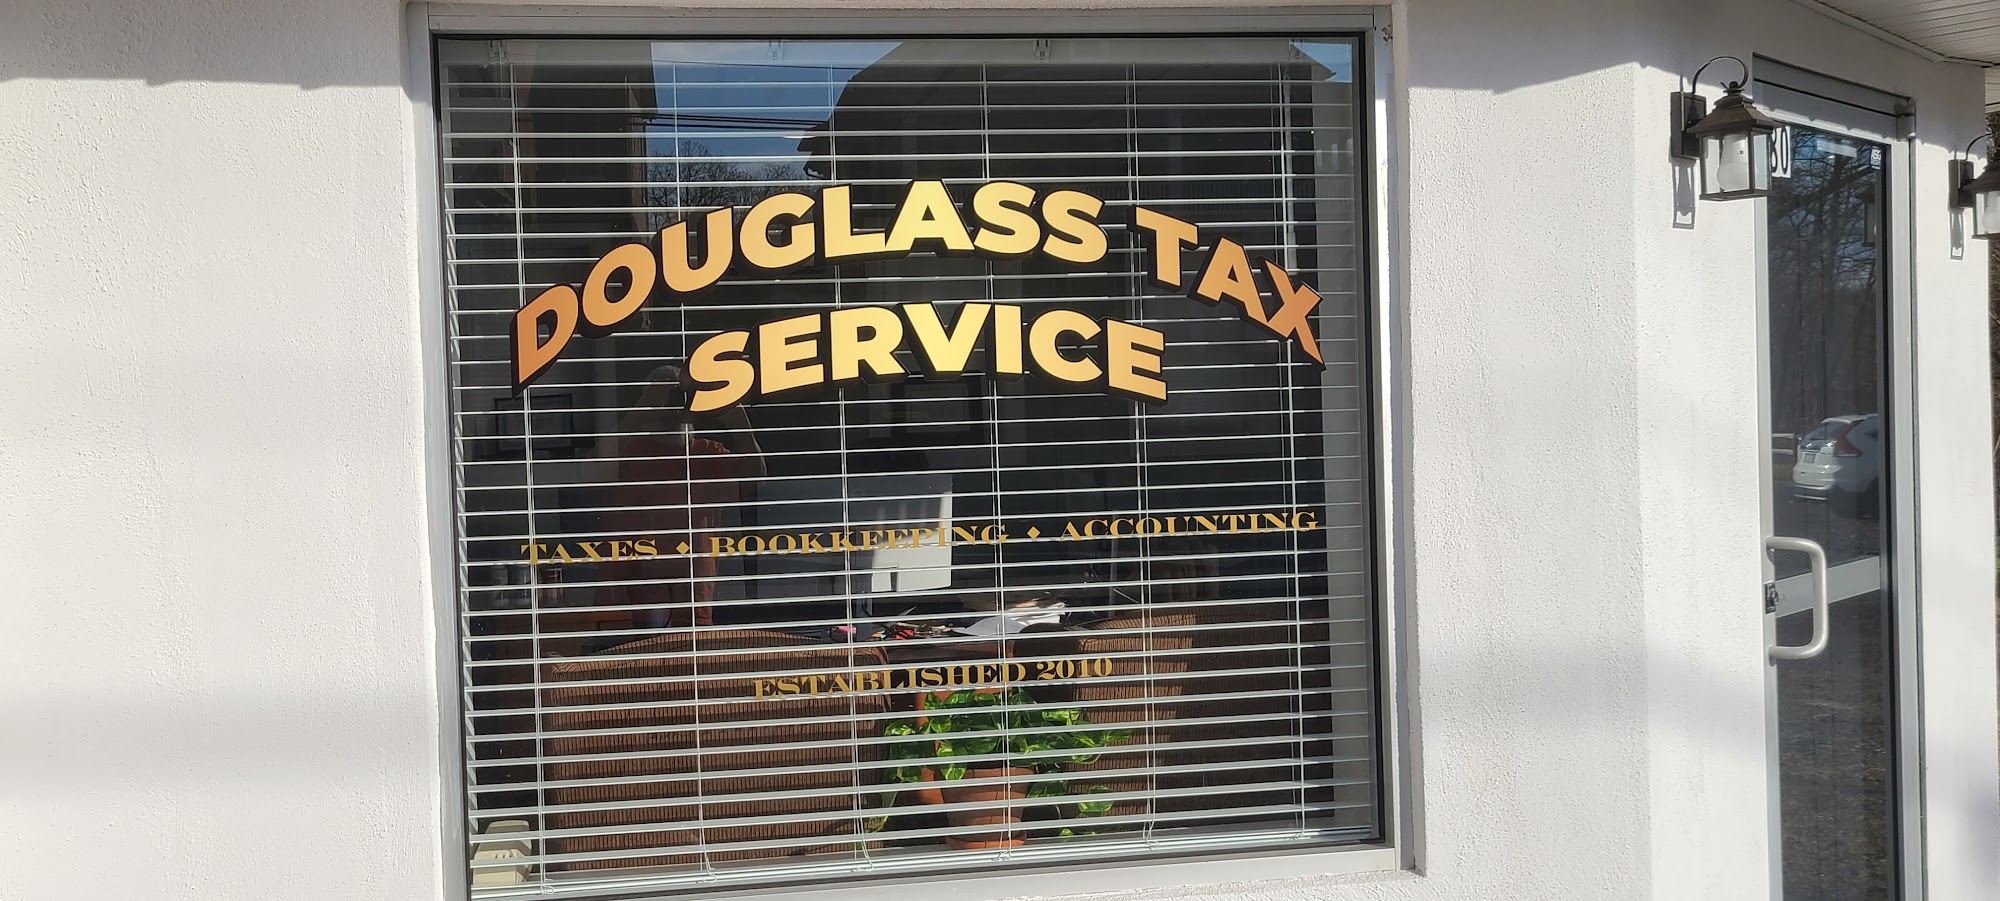 Walter Douglass Tax Service 480 Main St, Schwenksville Pennsylvania 19473